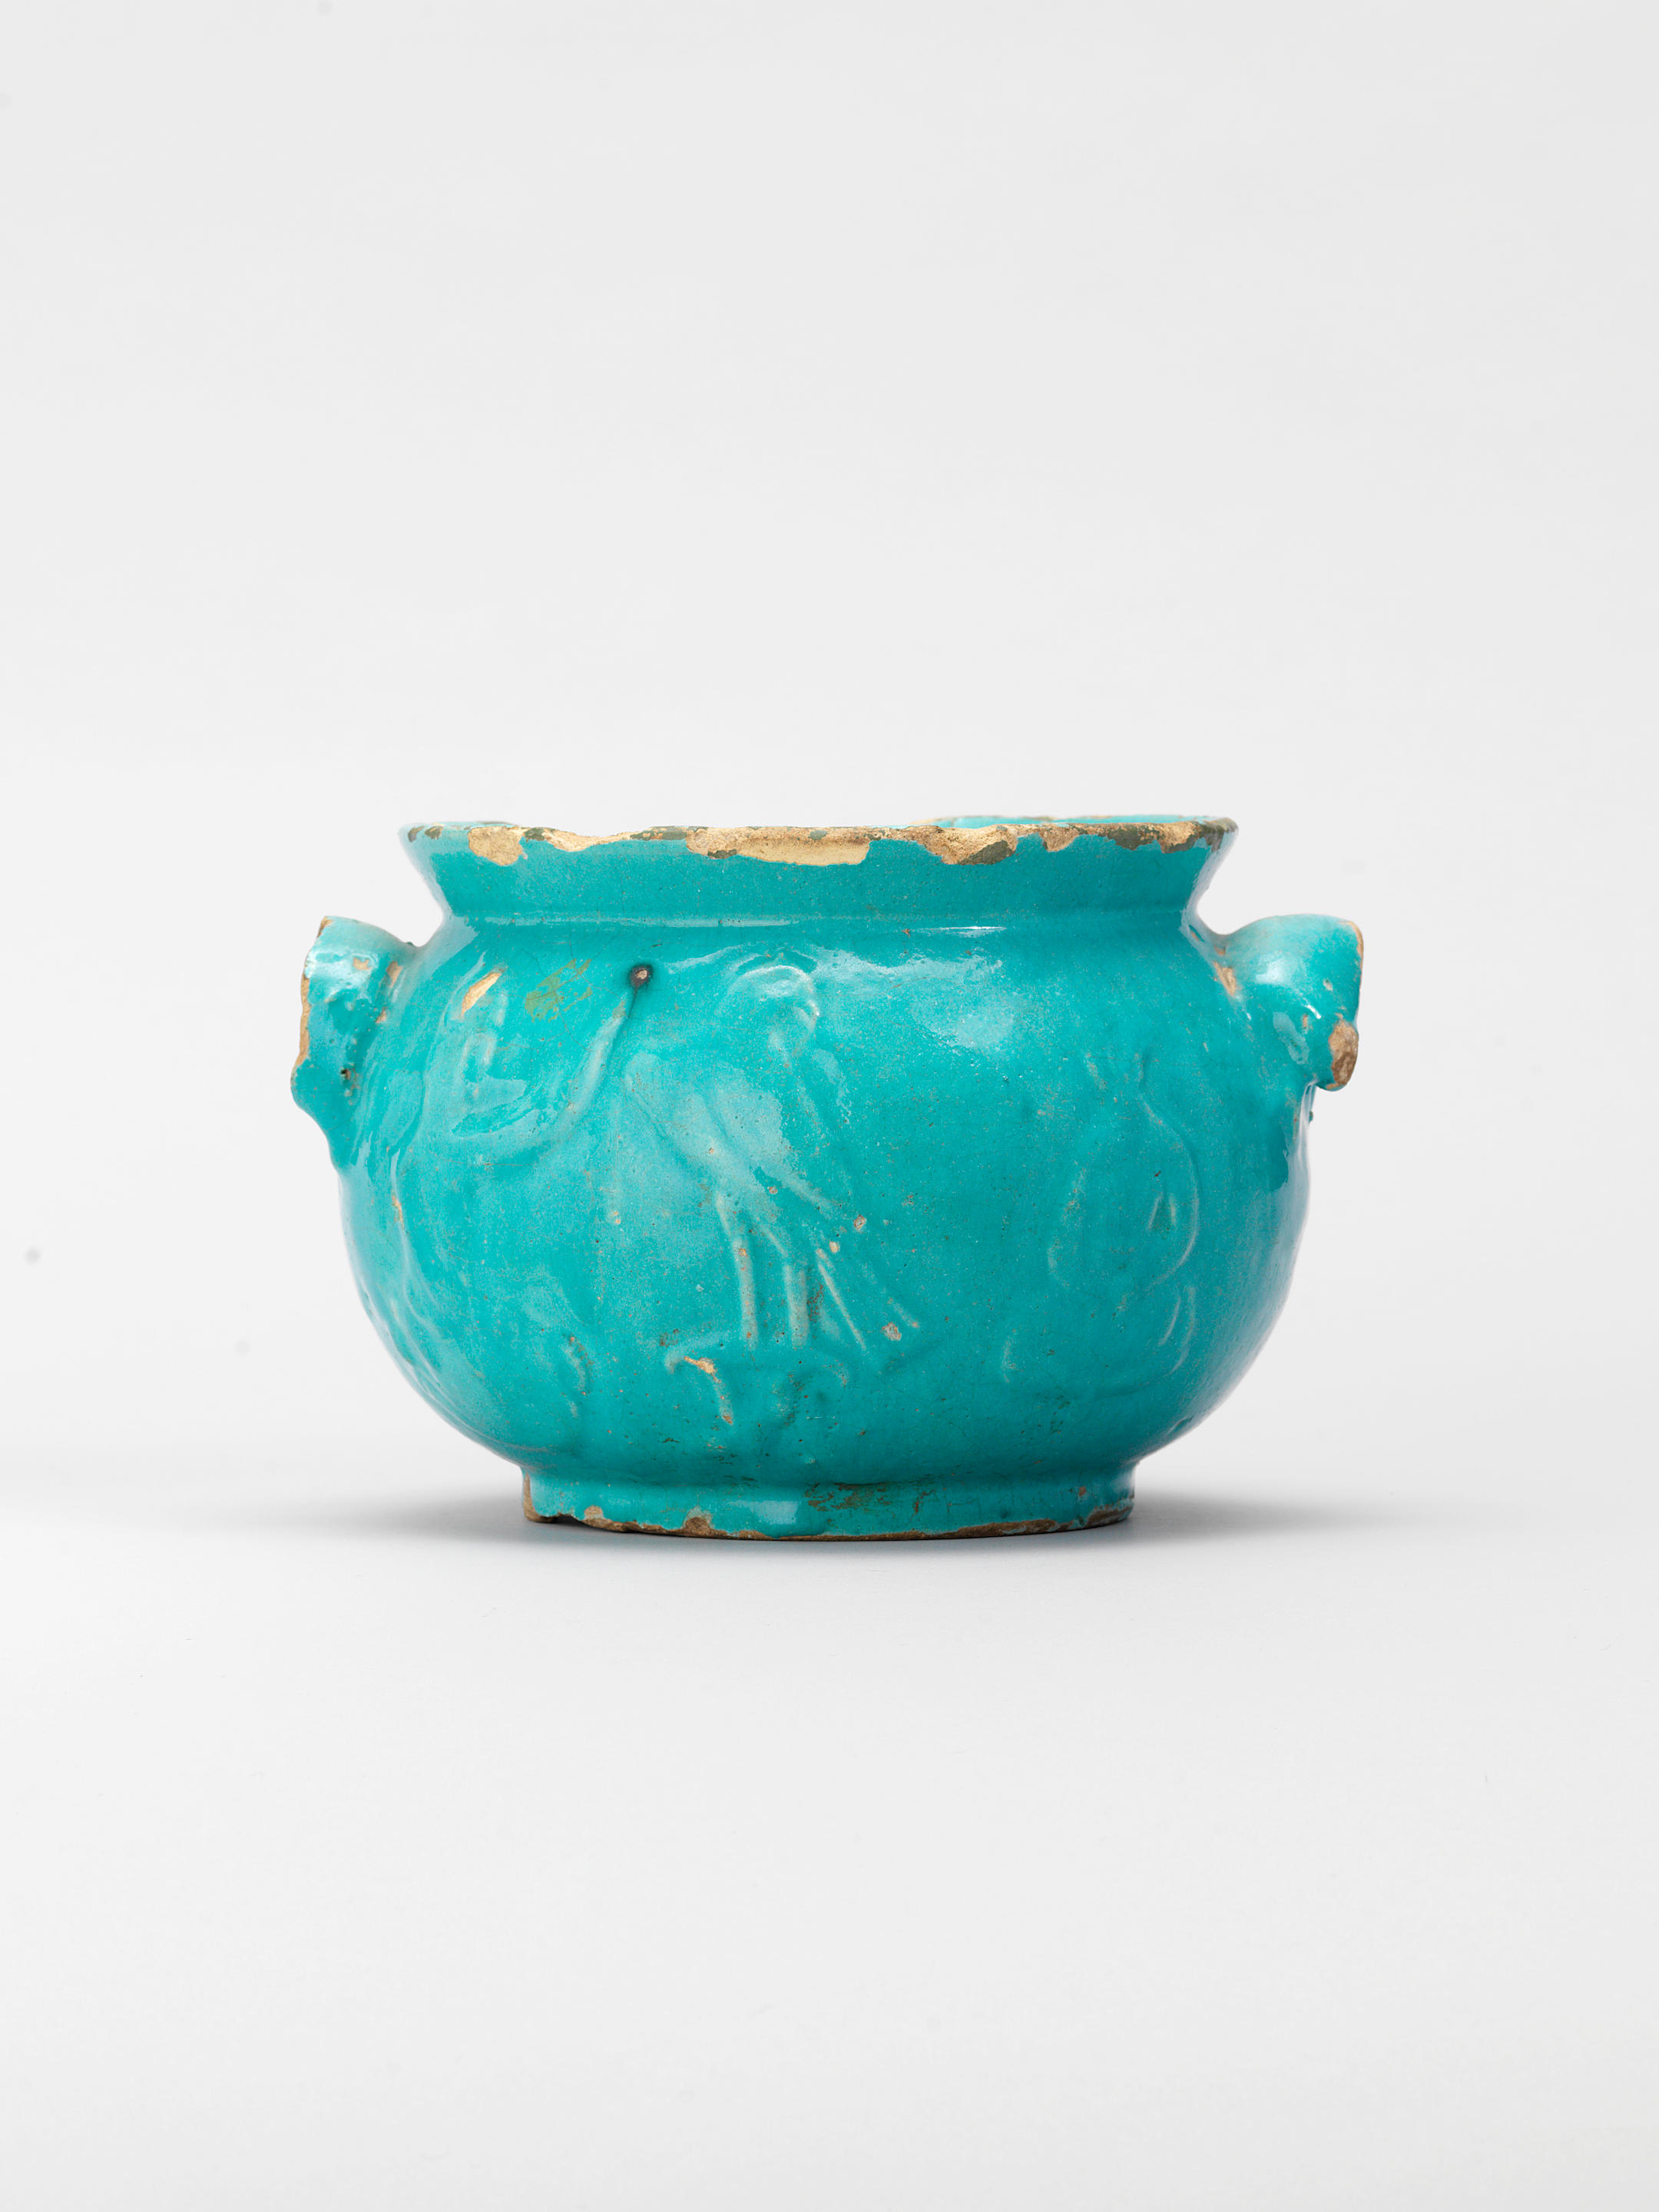 Bonhams An Unusual Safavid Monochrome Moulded Pottery Vessel Persia 17th Century